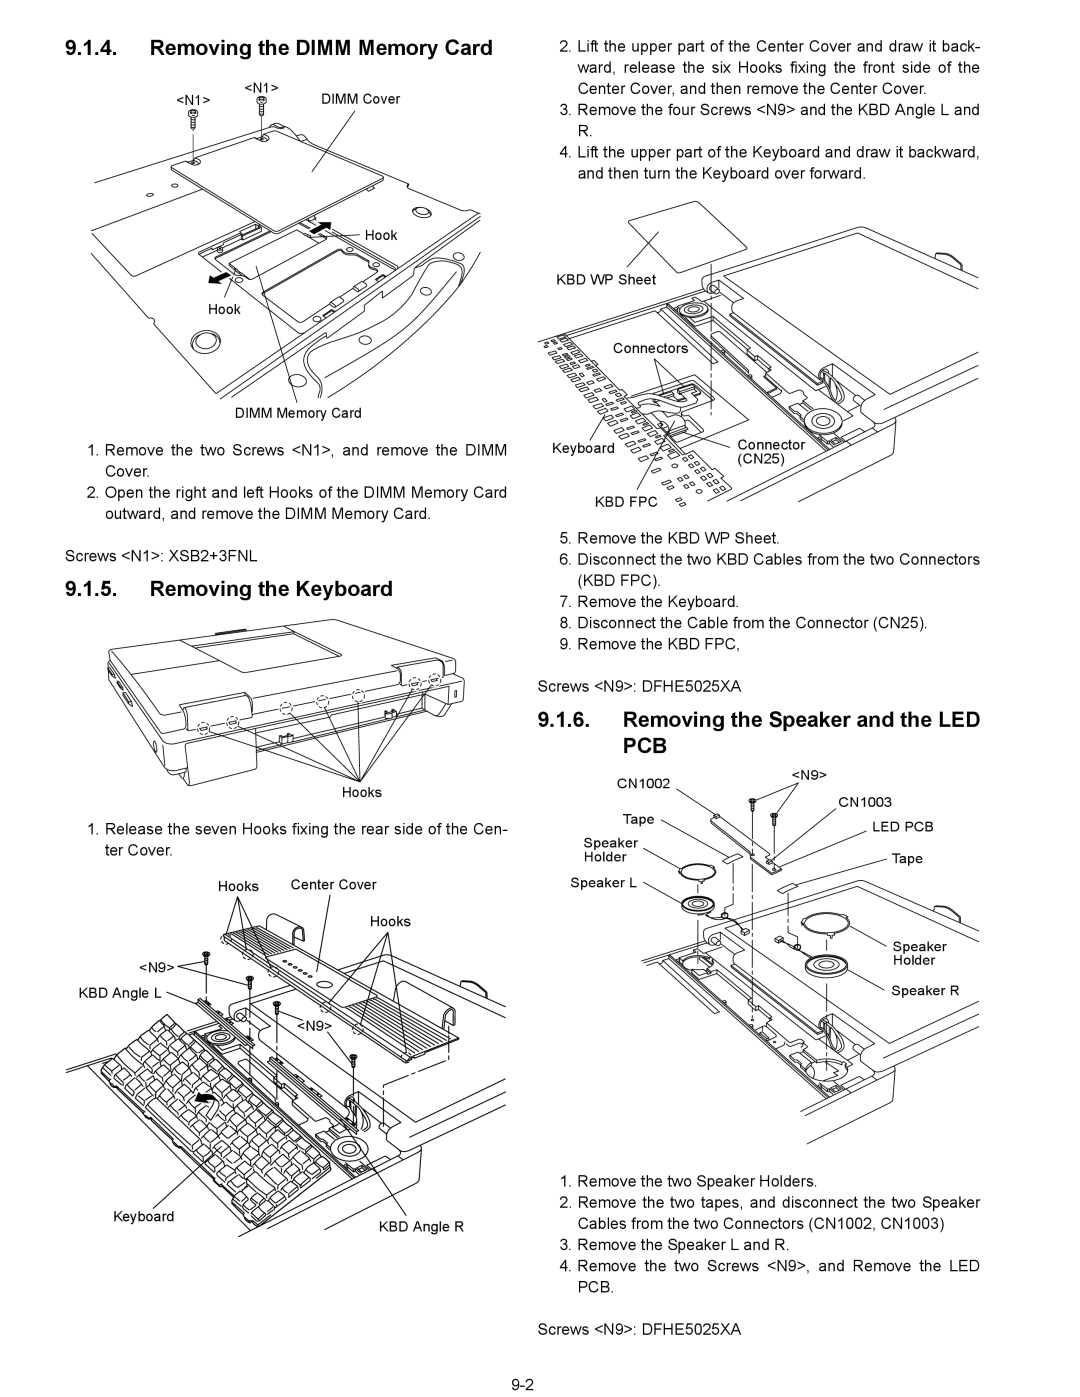 Panasonic CF-74ECBGDBM manual Removing the Dimm Memory Card, Removing the Keyboard, Removing the Speaker and the LED PCB 